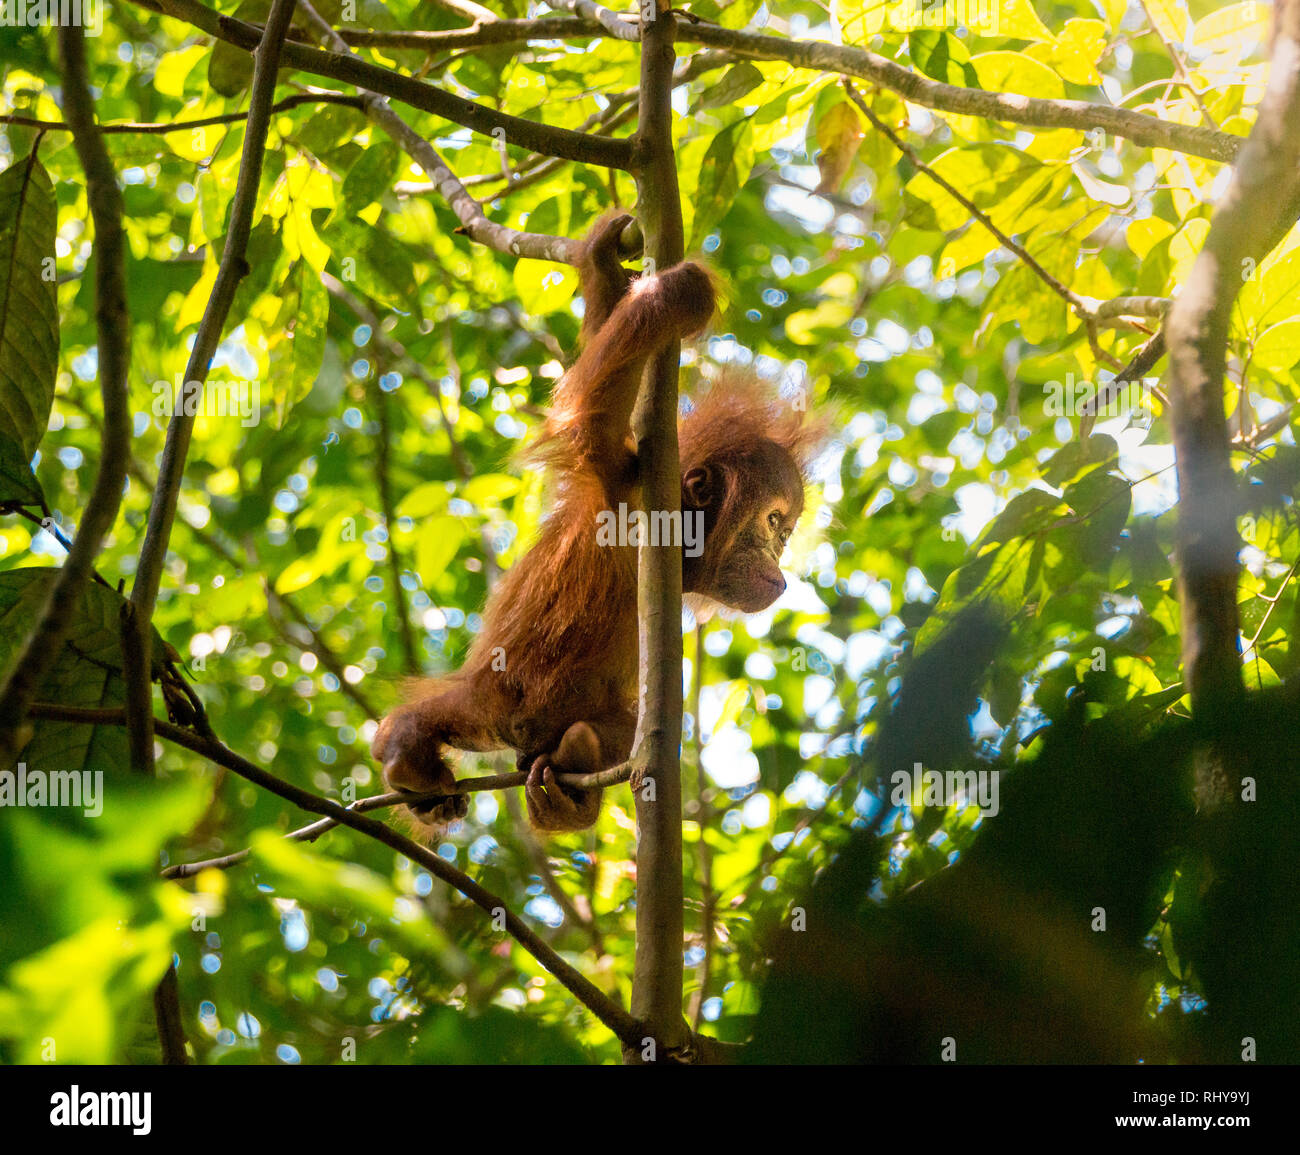 World's cutest baby orangutan hangs in a tree in Borneo Stock Photo